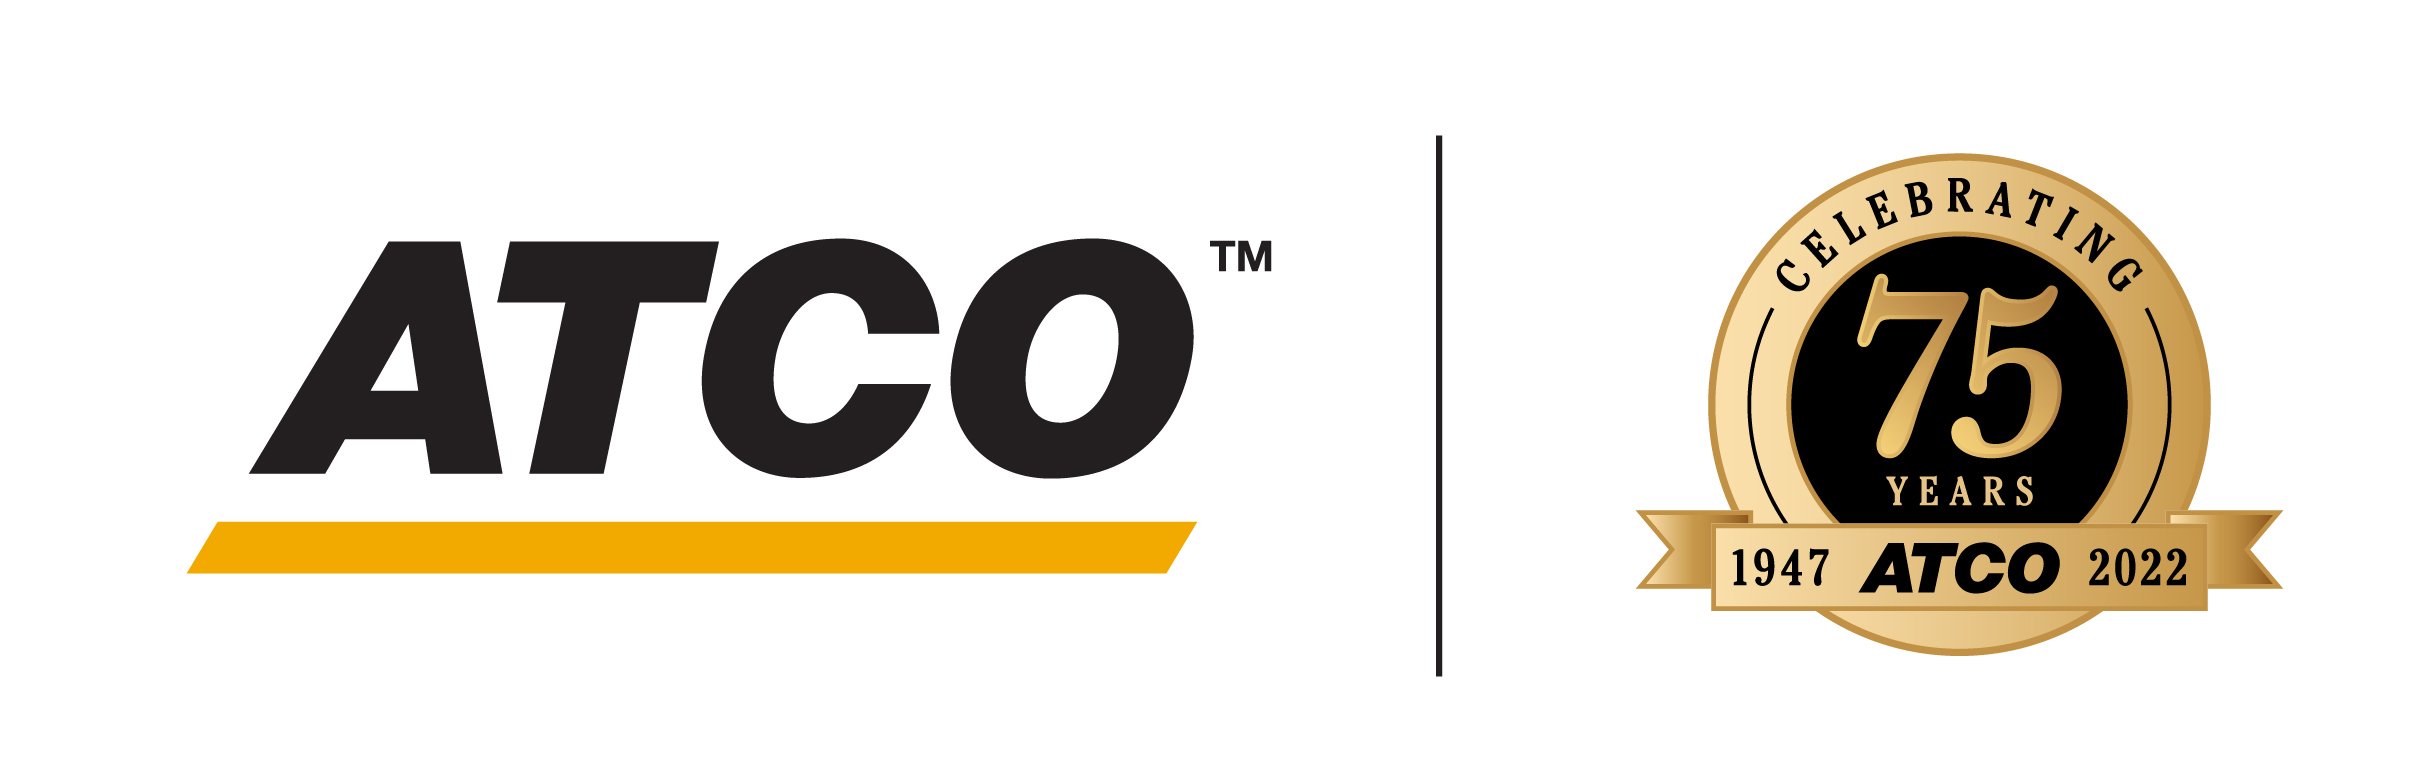 atco-75th-logo-blk-gold-horizontal.jpg